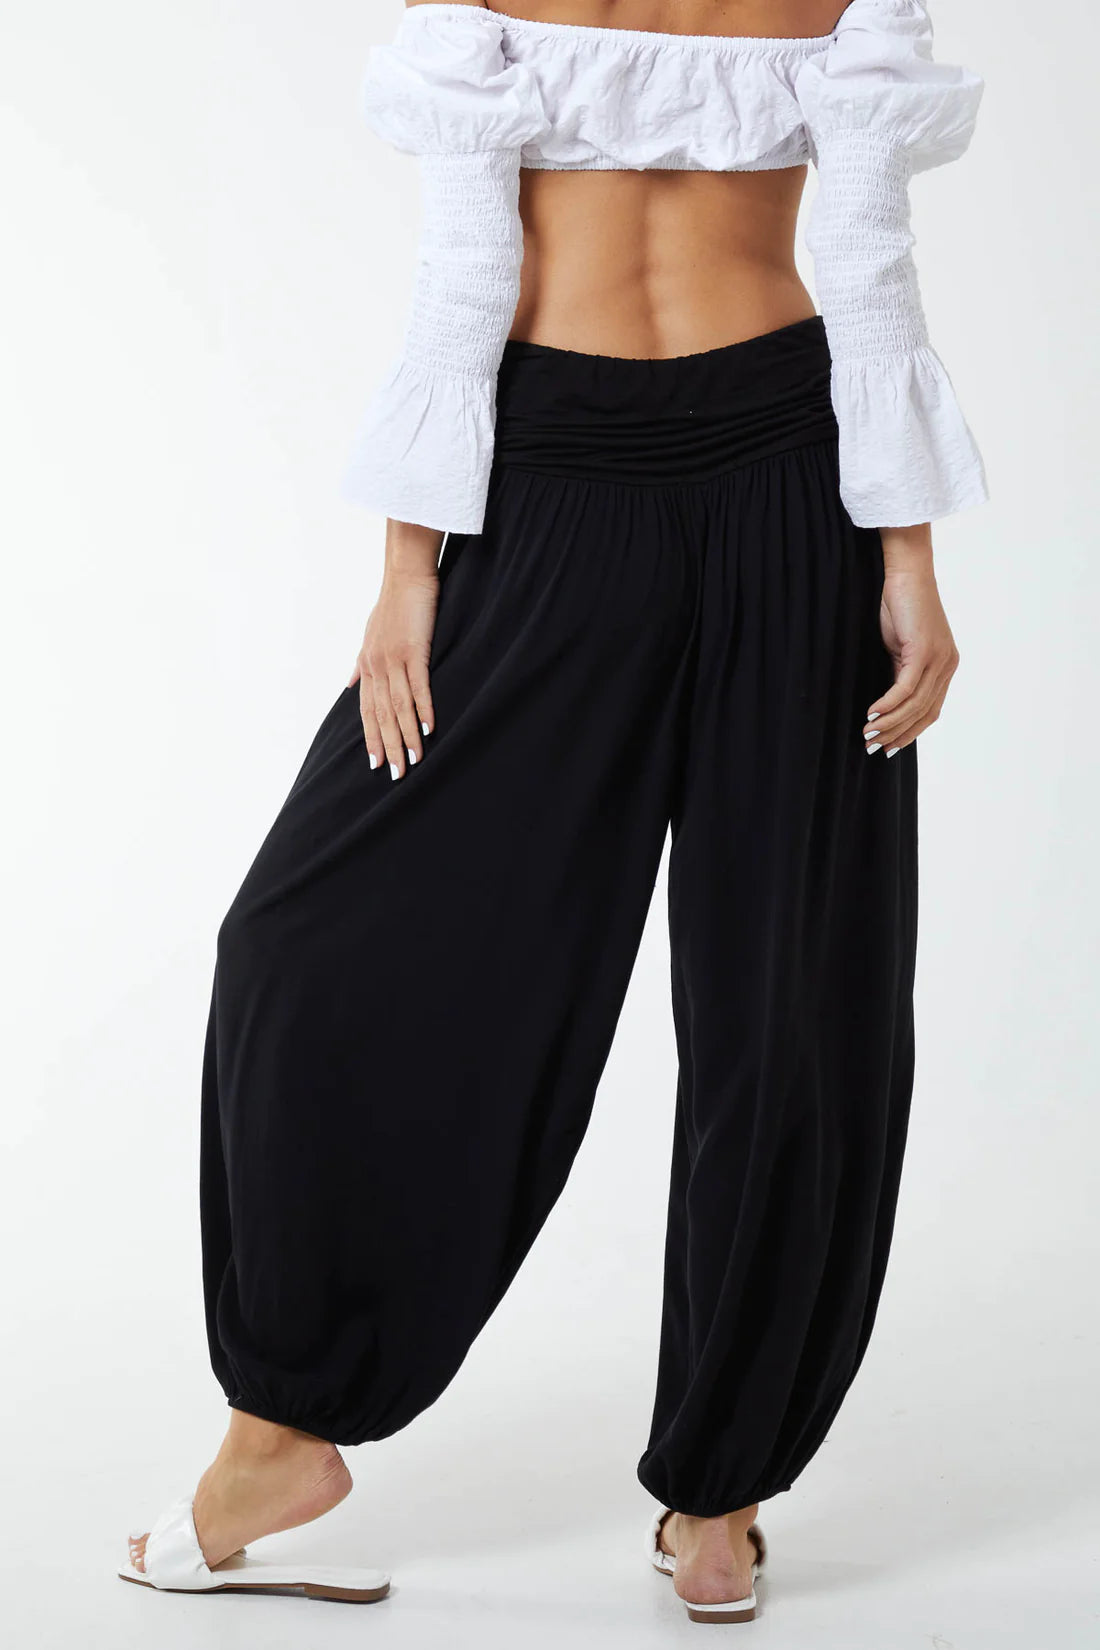 Buy virblatt - Harem Pants for Women Plus Size Hippie Pants Comfy Pants -  Nirvana bl XXL Black at Amazon.in